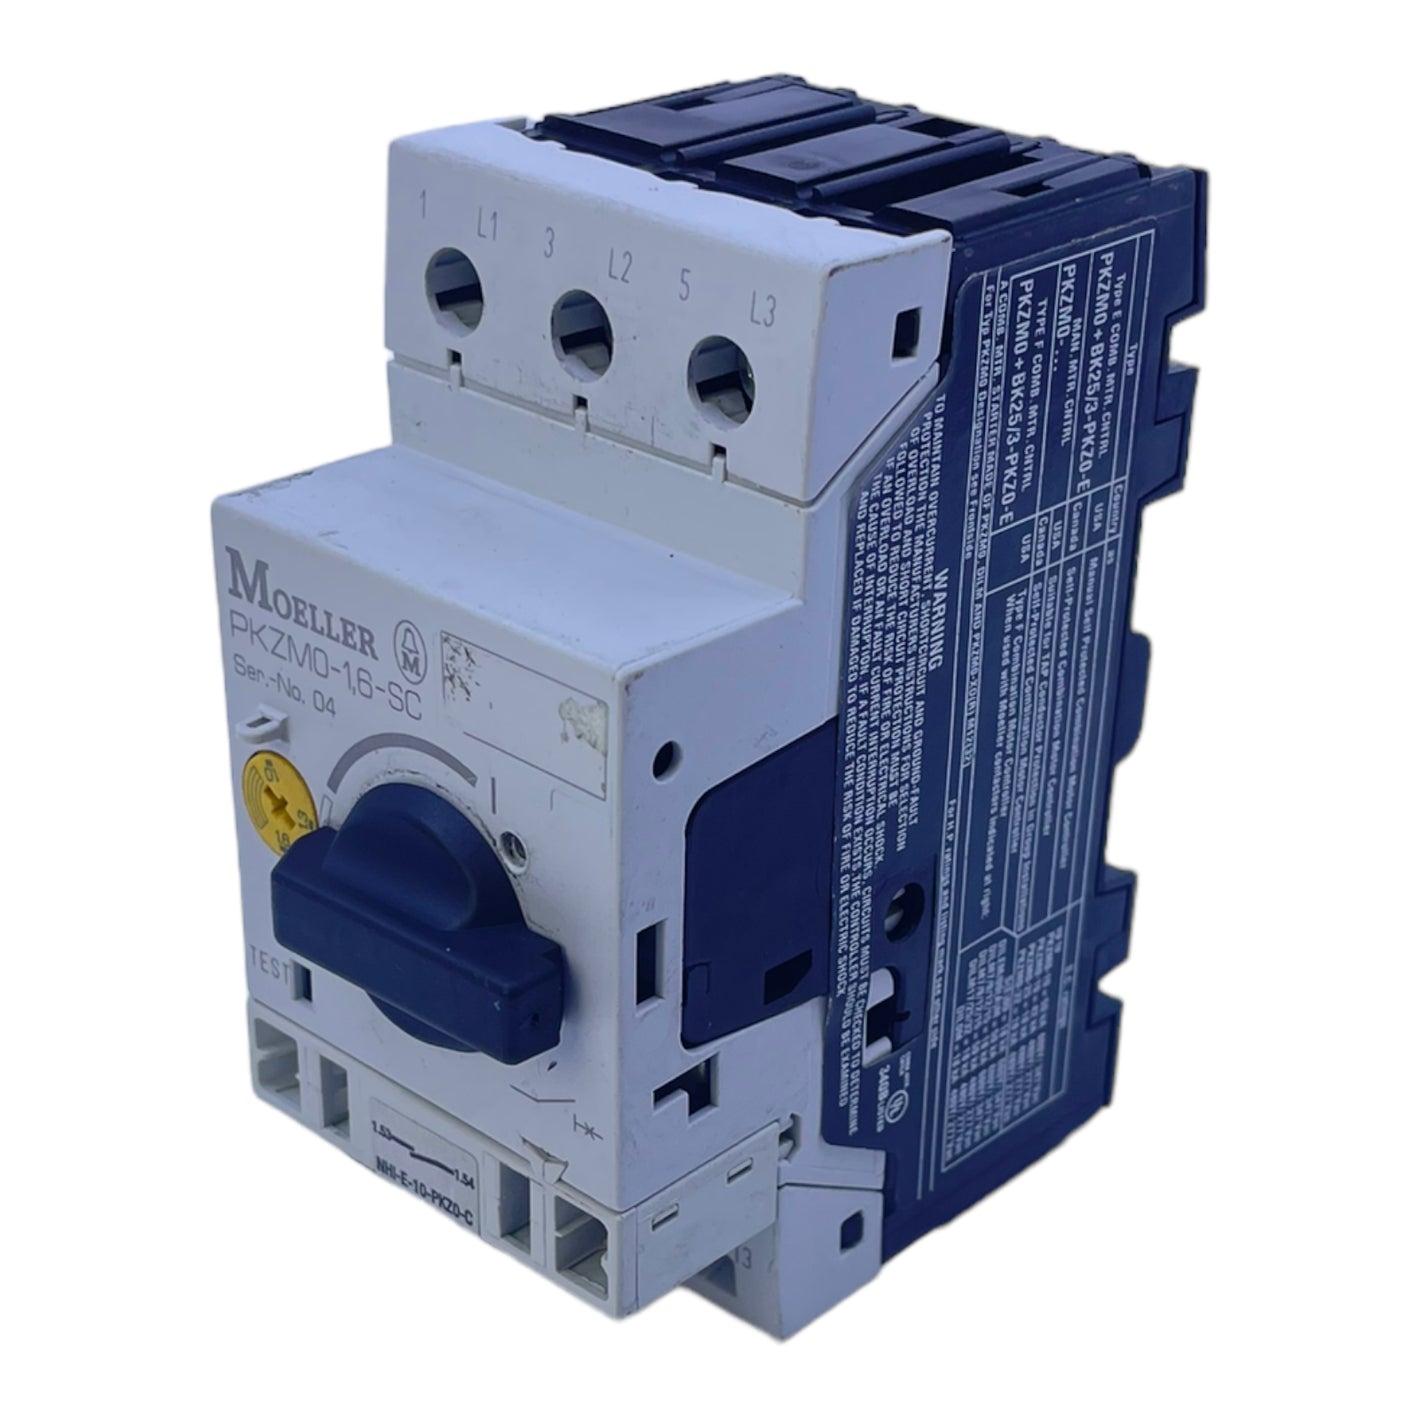 Moeller PKZM0-1,6-SC motor protection switch 229833 690V IP20 3-pole 1.6A 